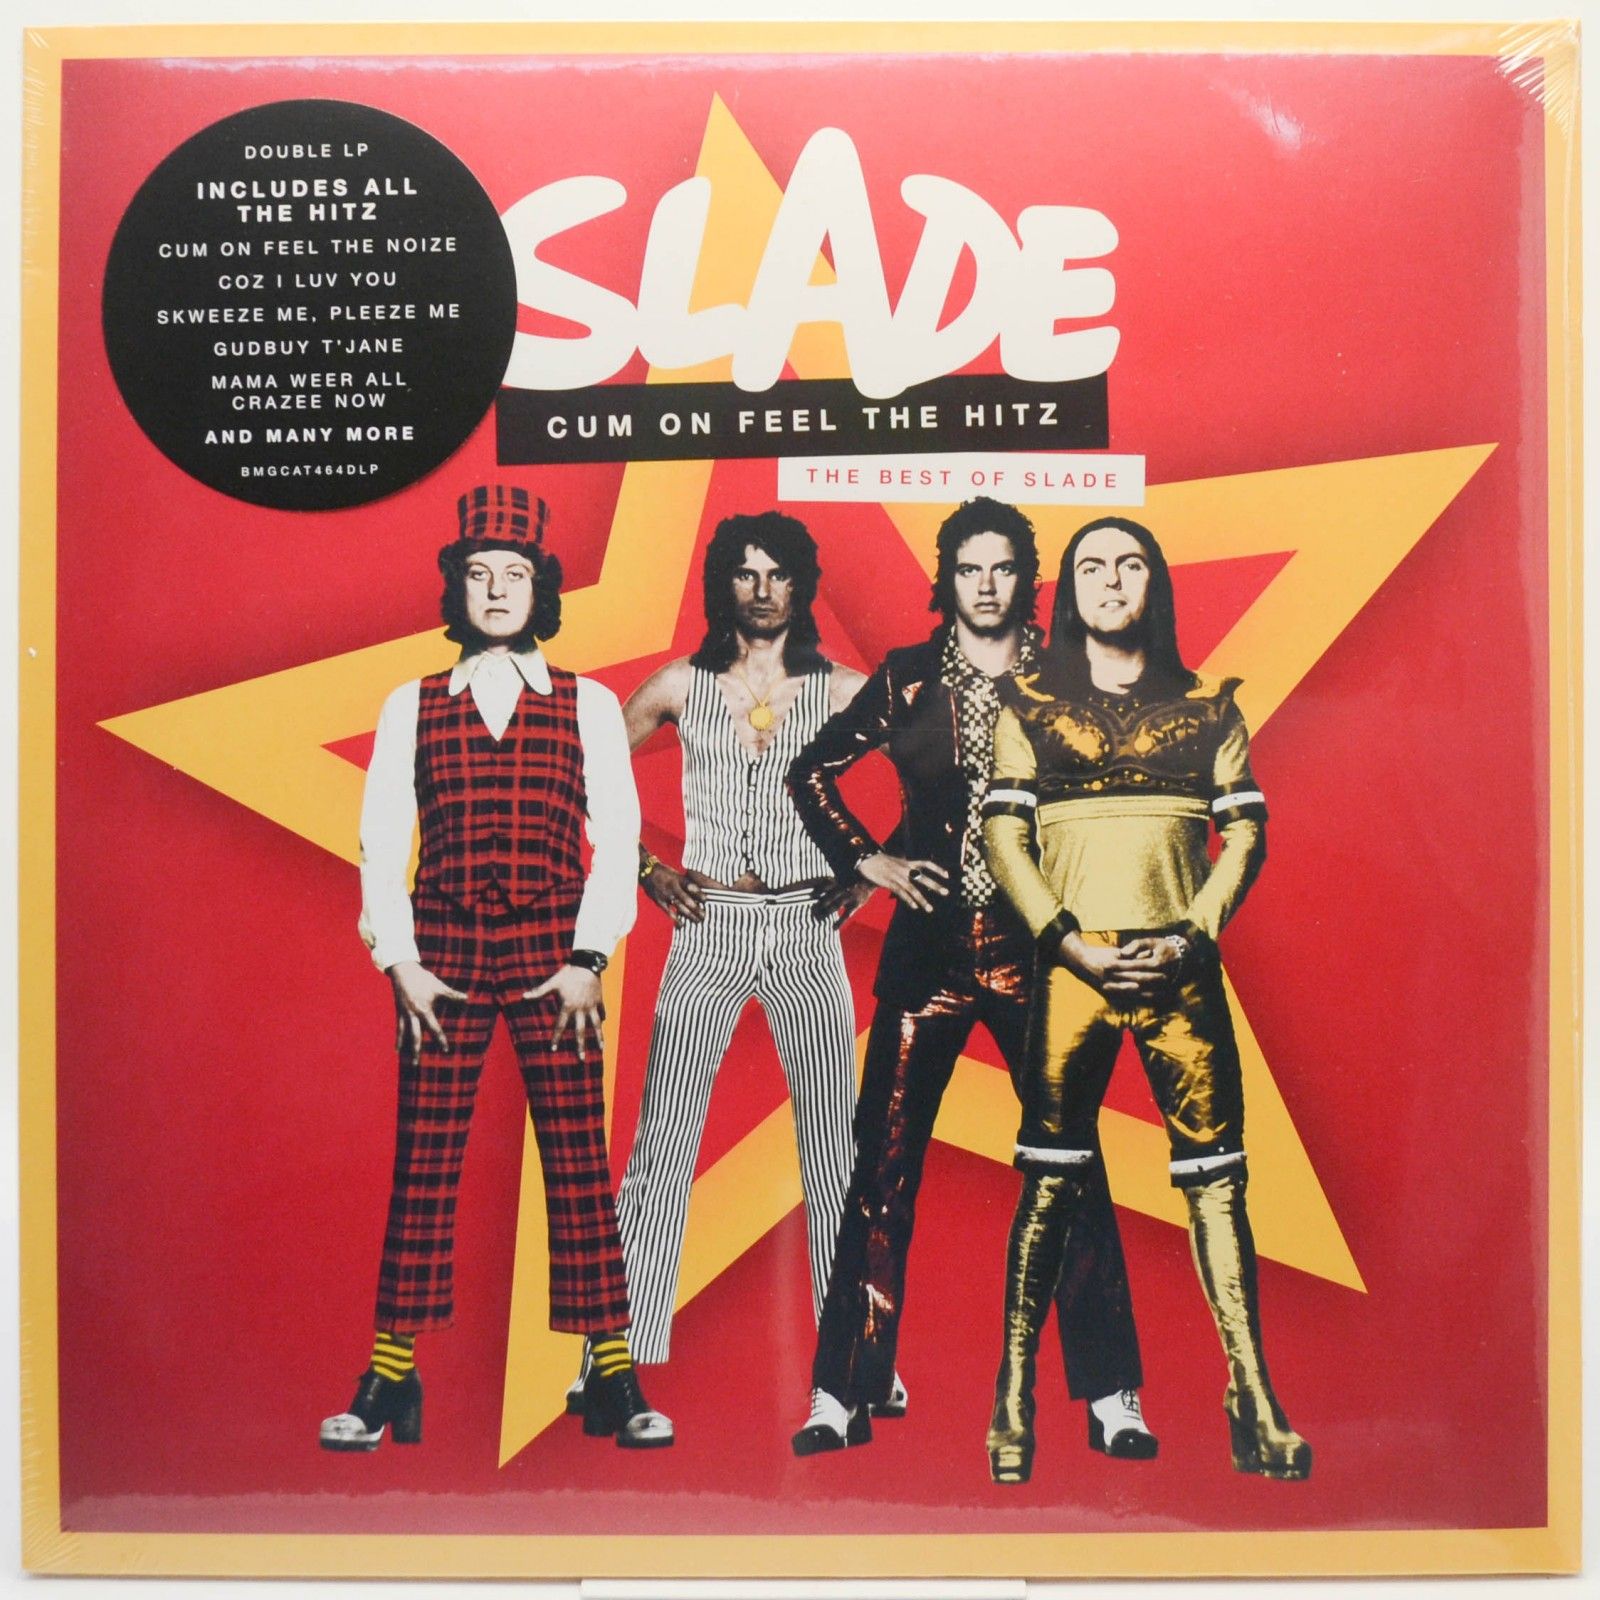 Slade — Cum On Feel The Hitz - The Best Of Slade (2LP), 2020